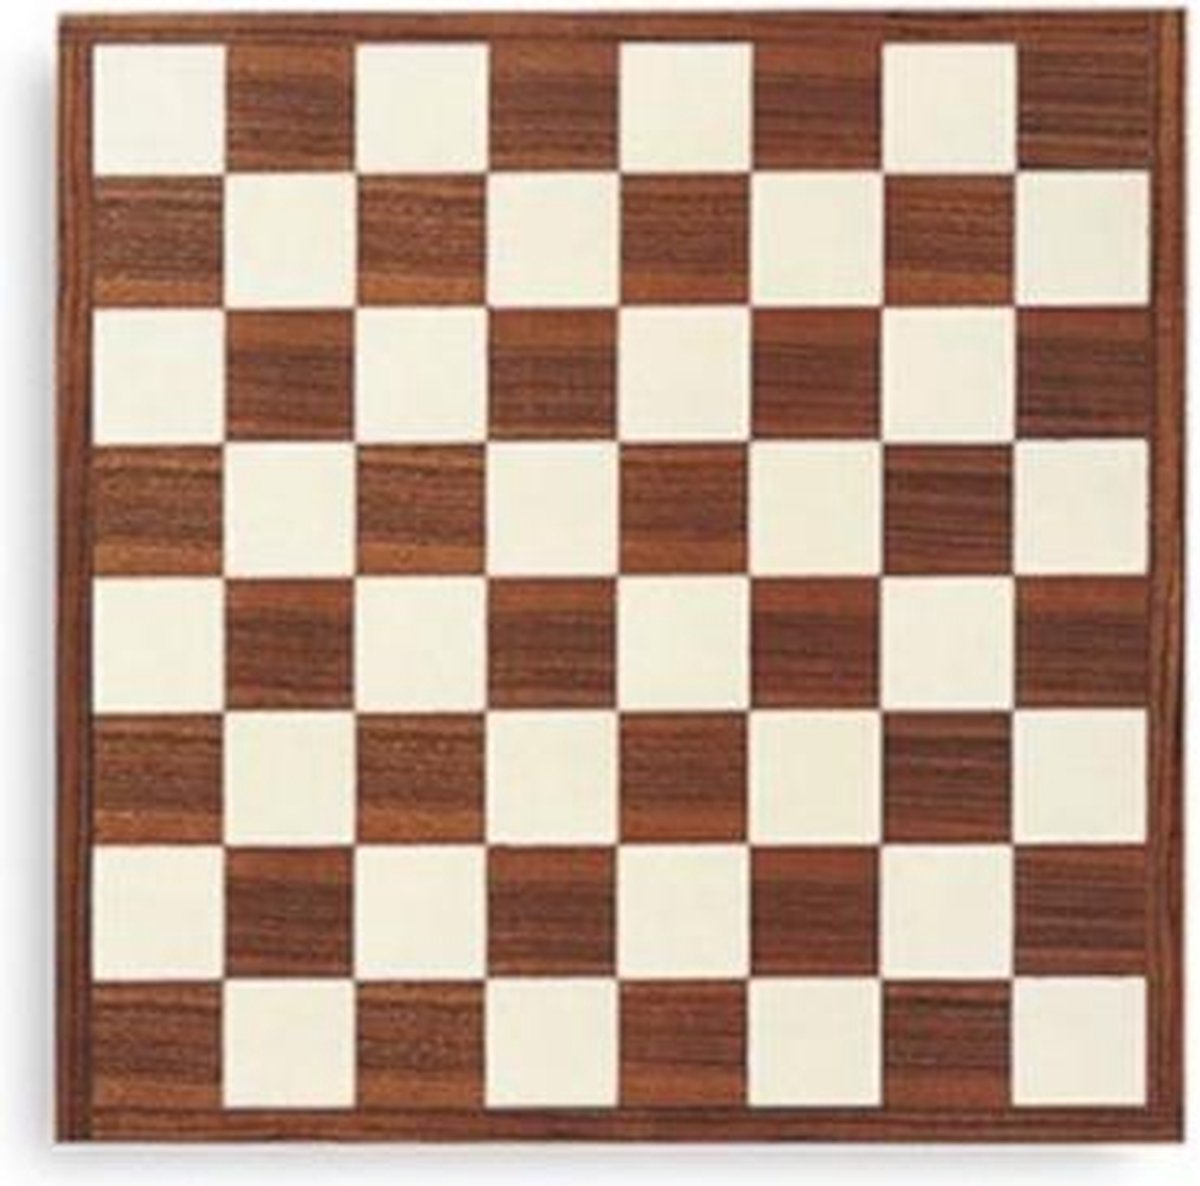 schaakbord 31 x 31 cm hout bruin/wit